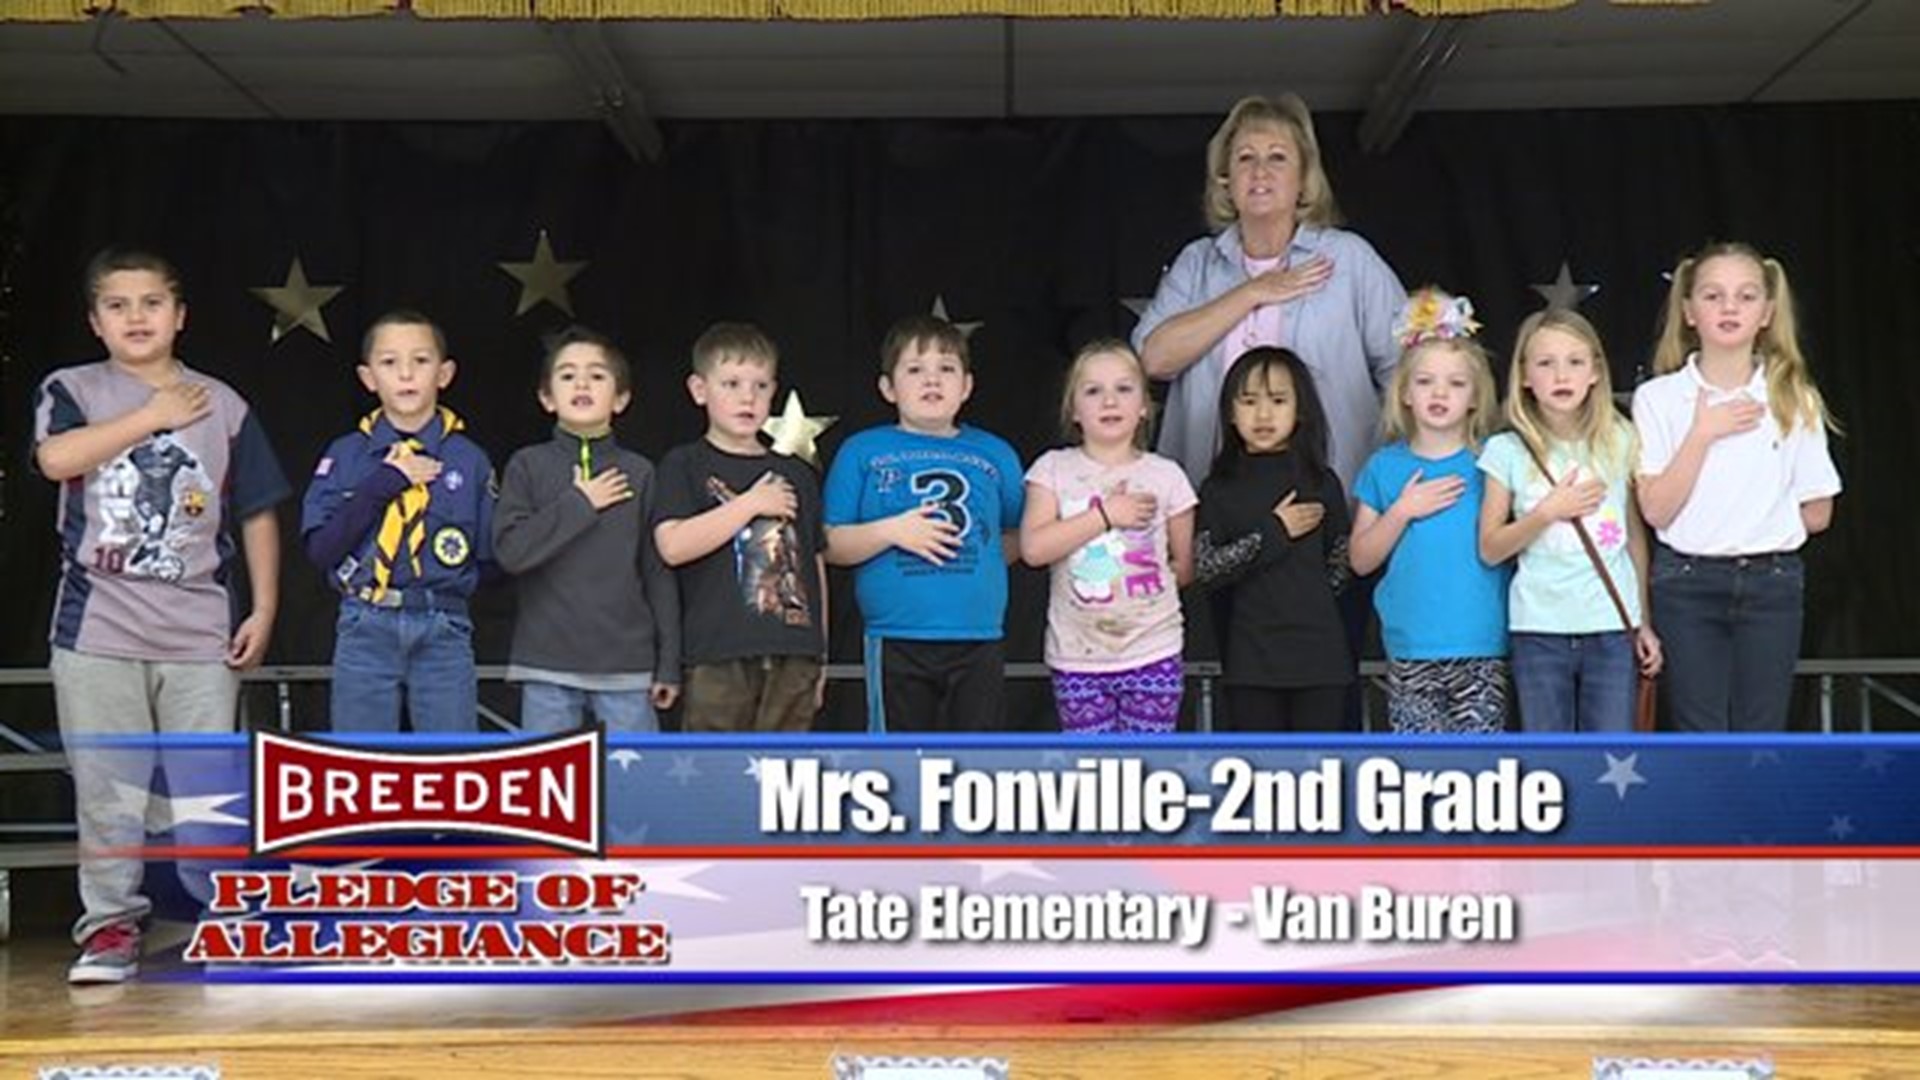 Tate Elementary, Van Buren - Mrs. Fonville - 2nd Grade